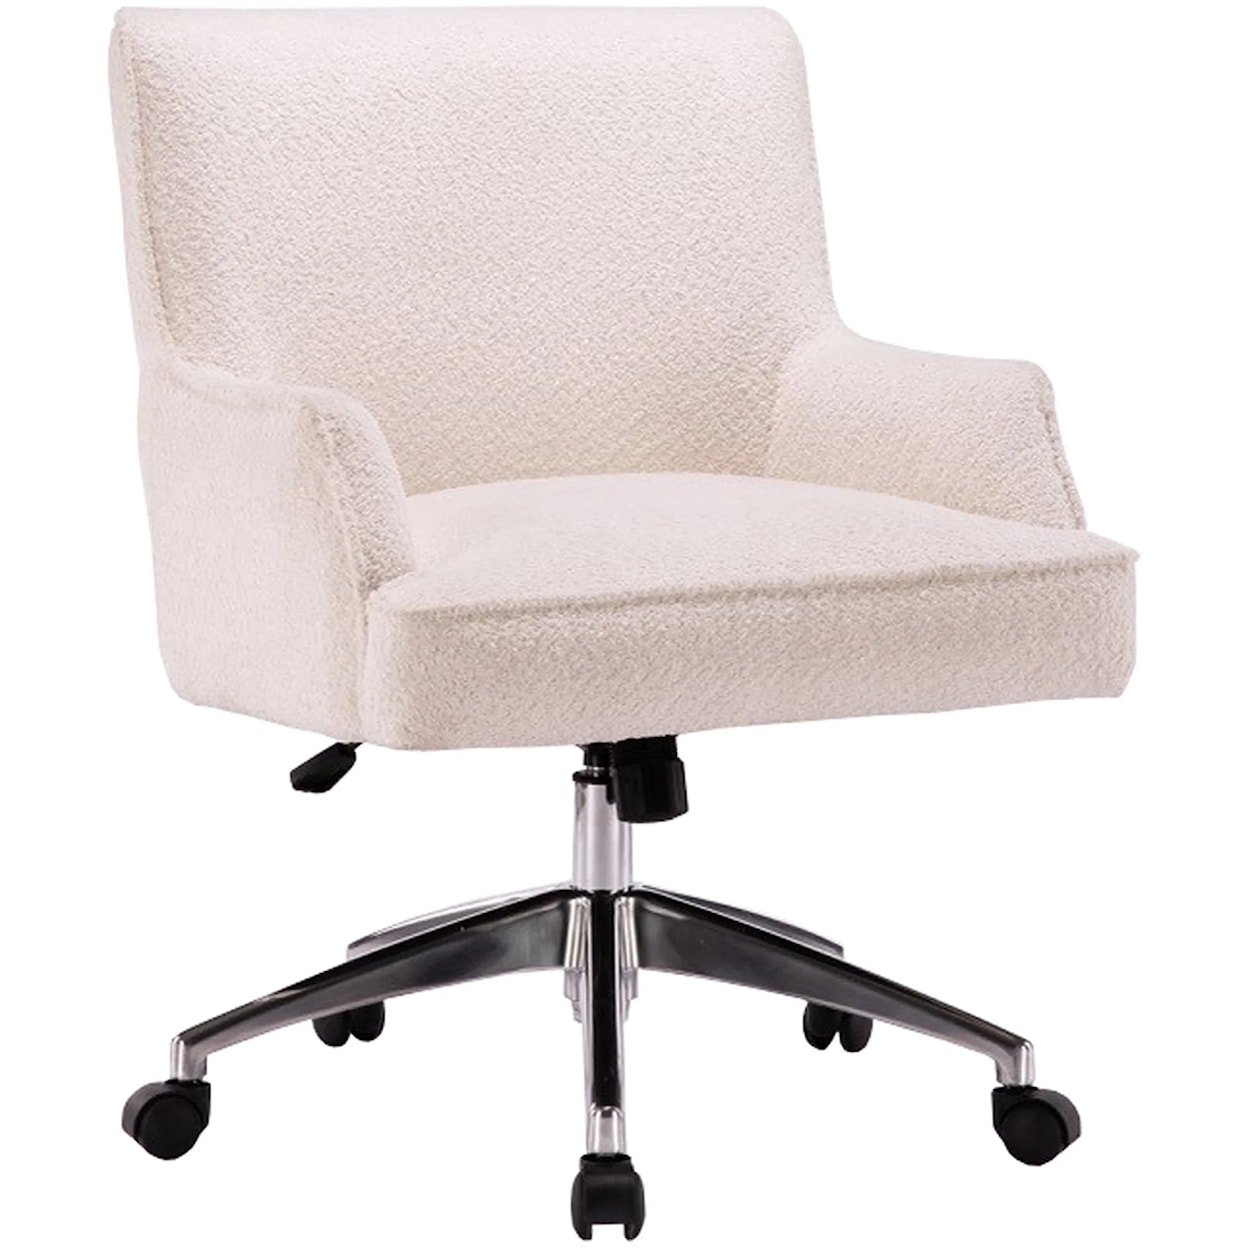 Paramount Living DC504 Fabric Desk Chair